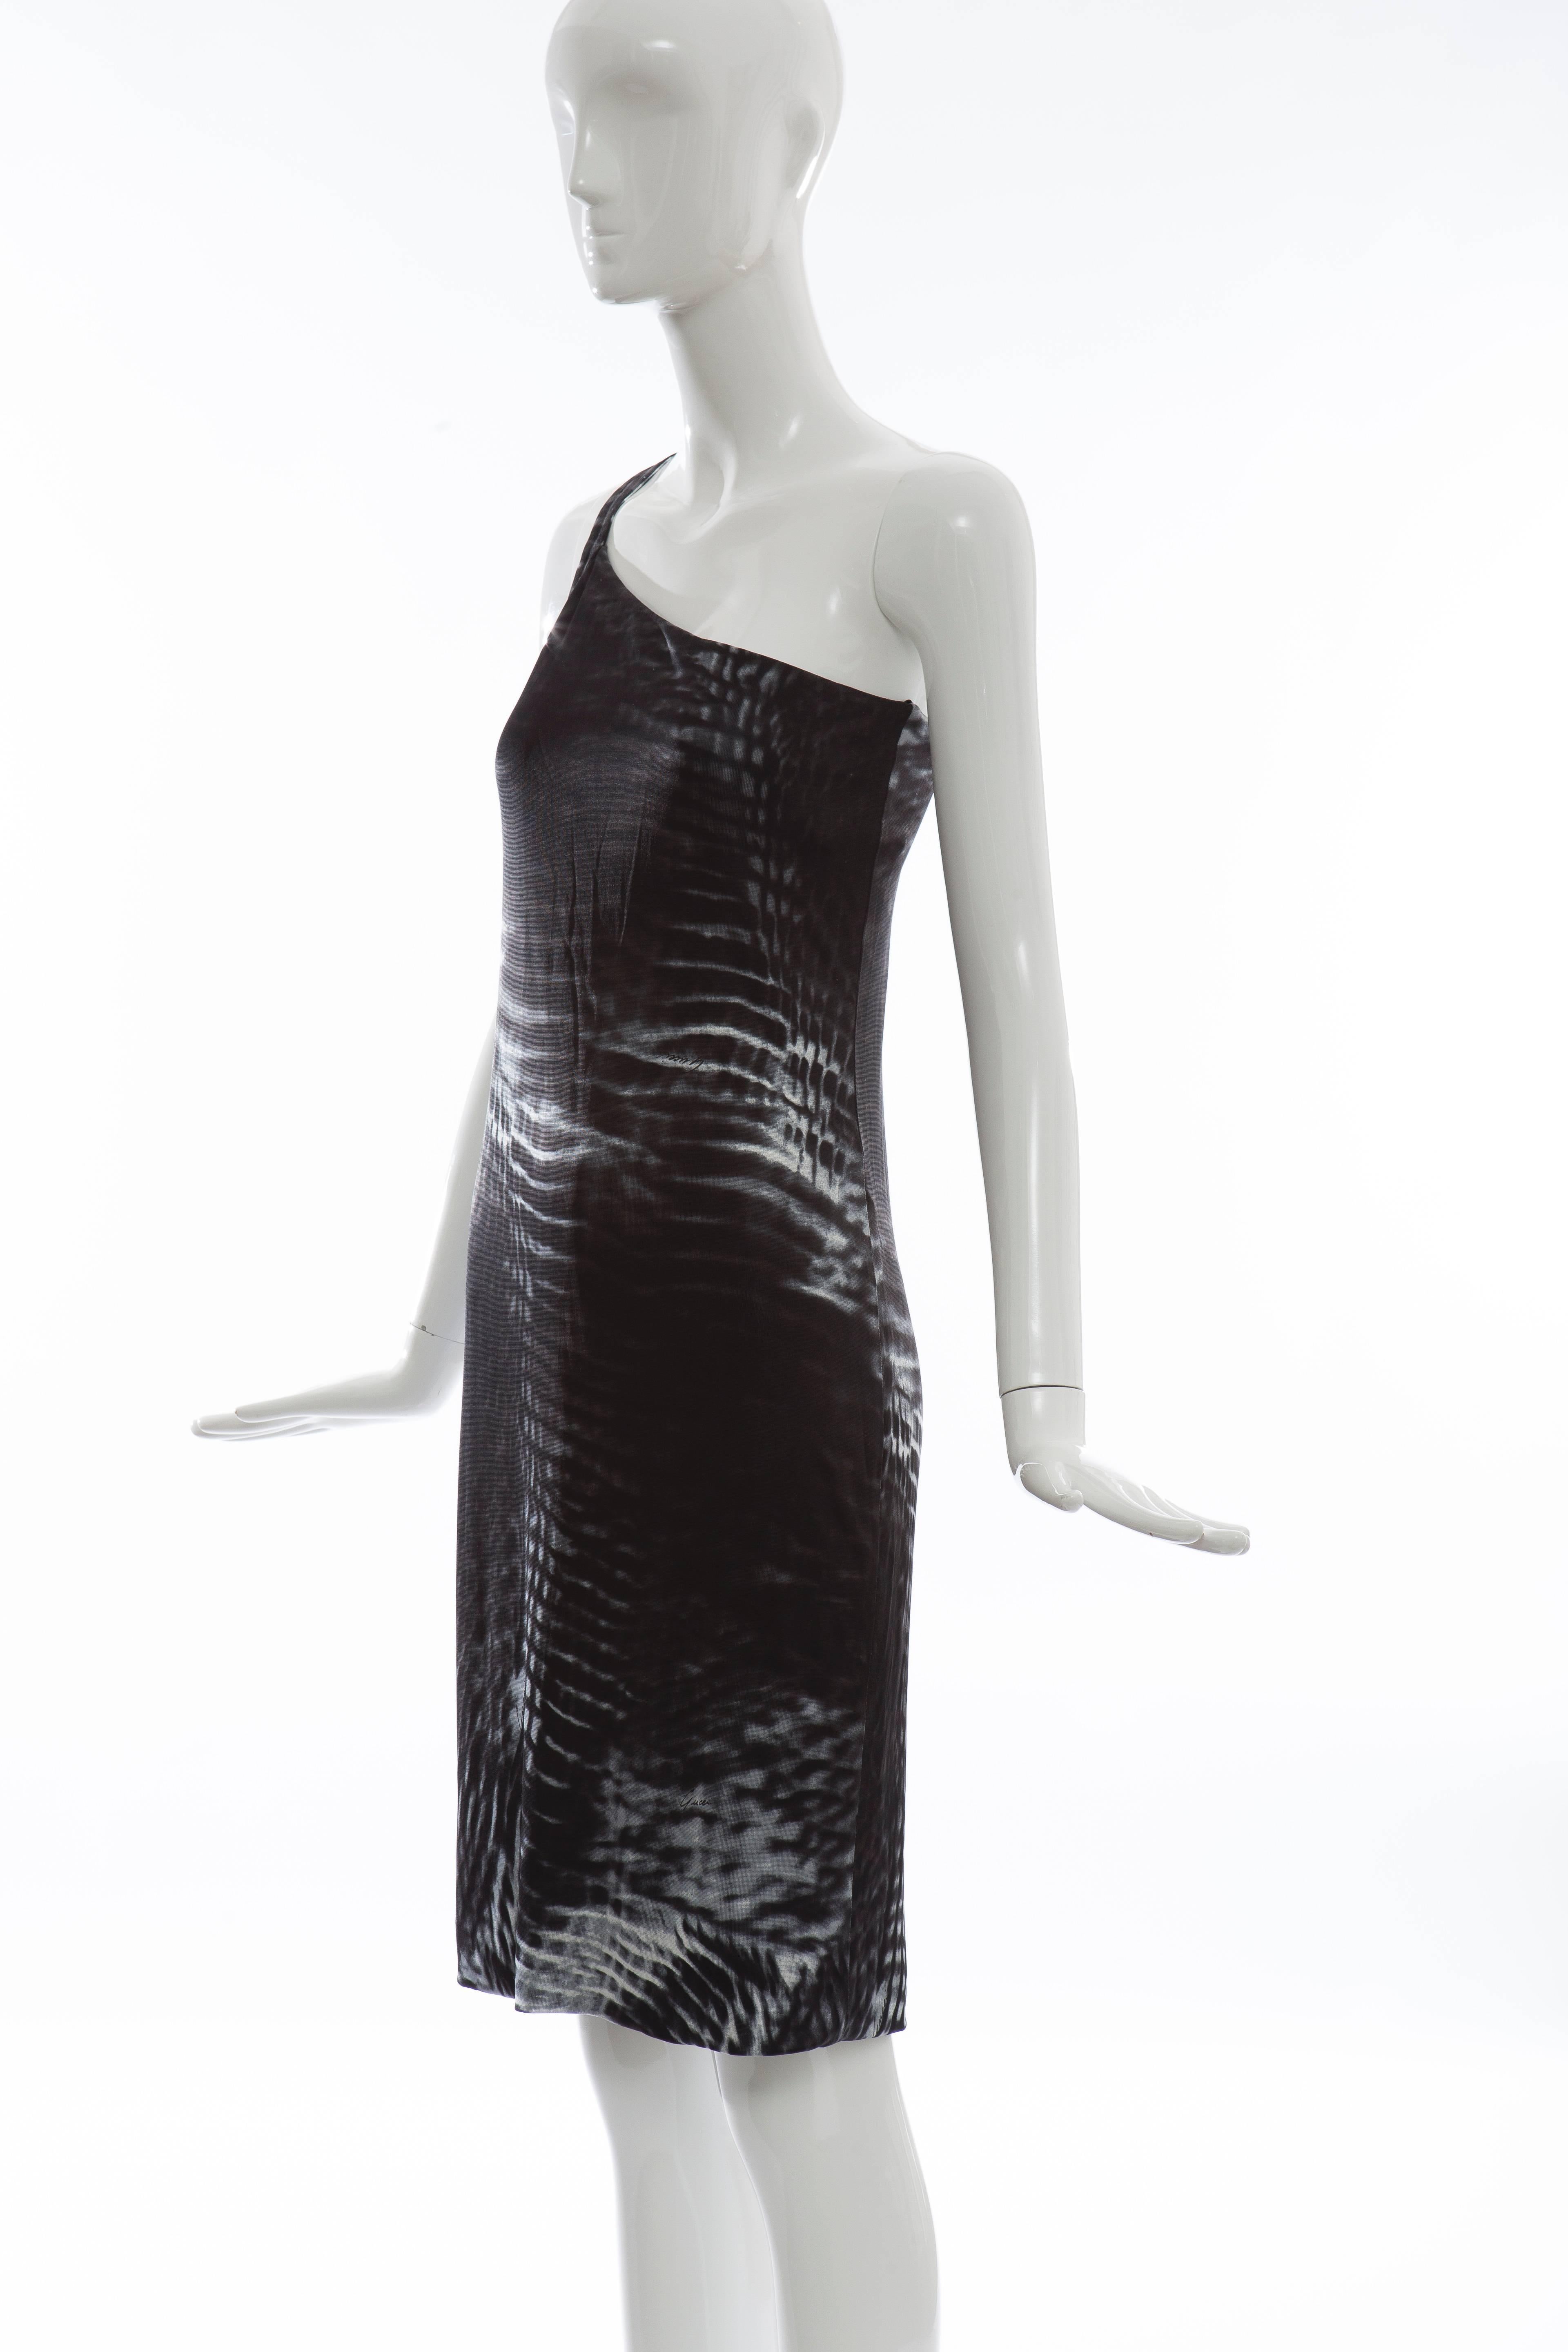 Tom Ford for Gucci Runway Black One-Shoulder Printed Dress , Spring 2000 For Sale 5